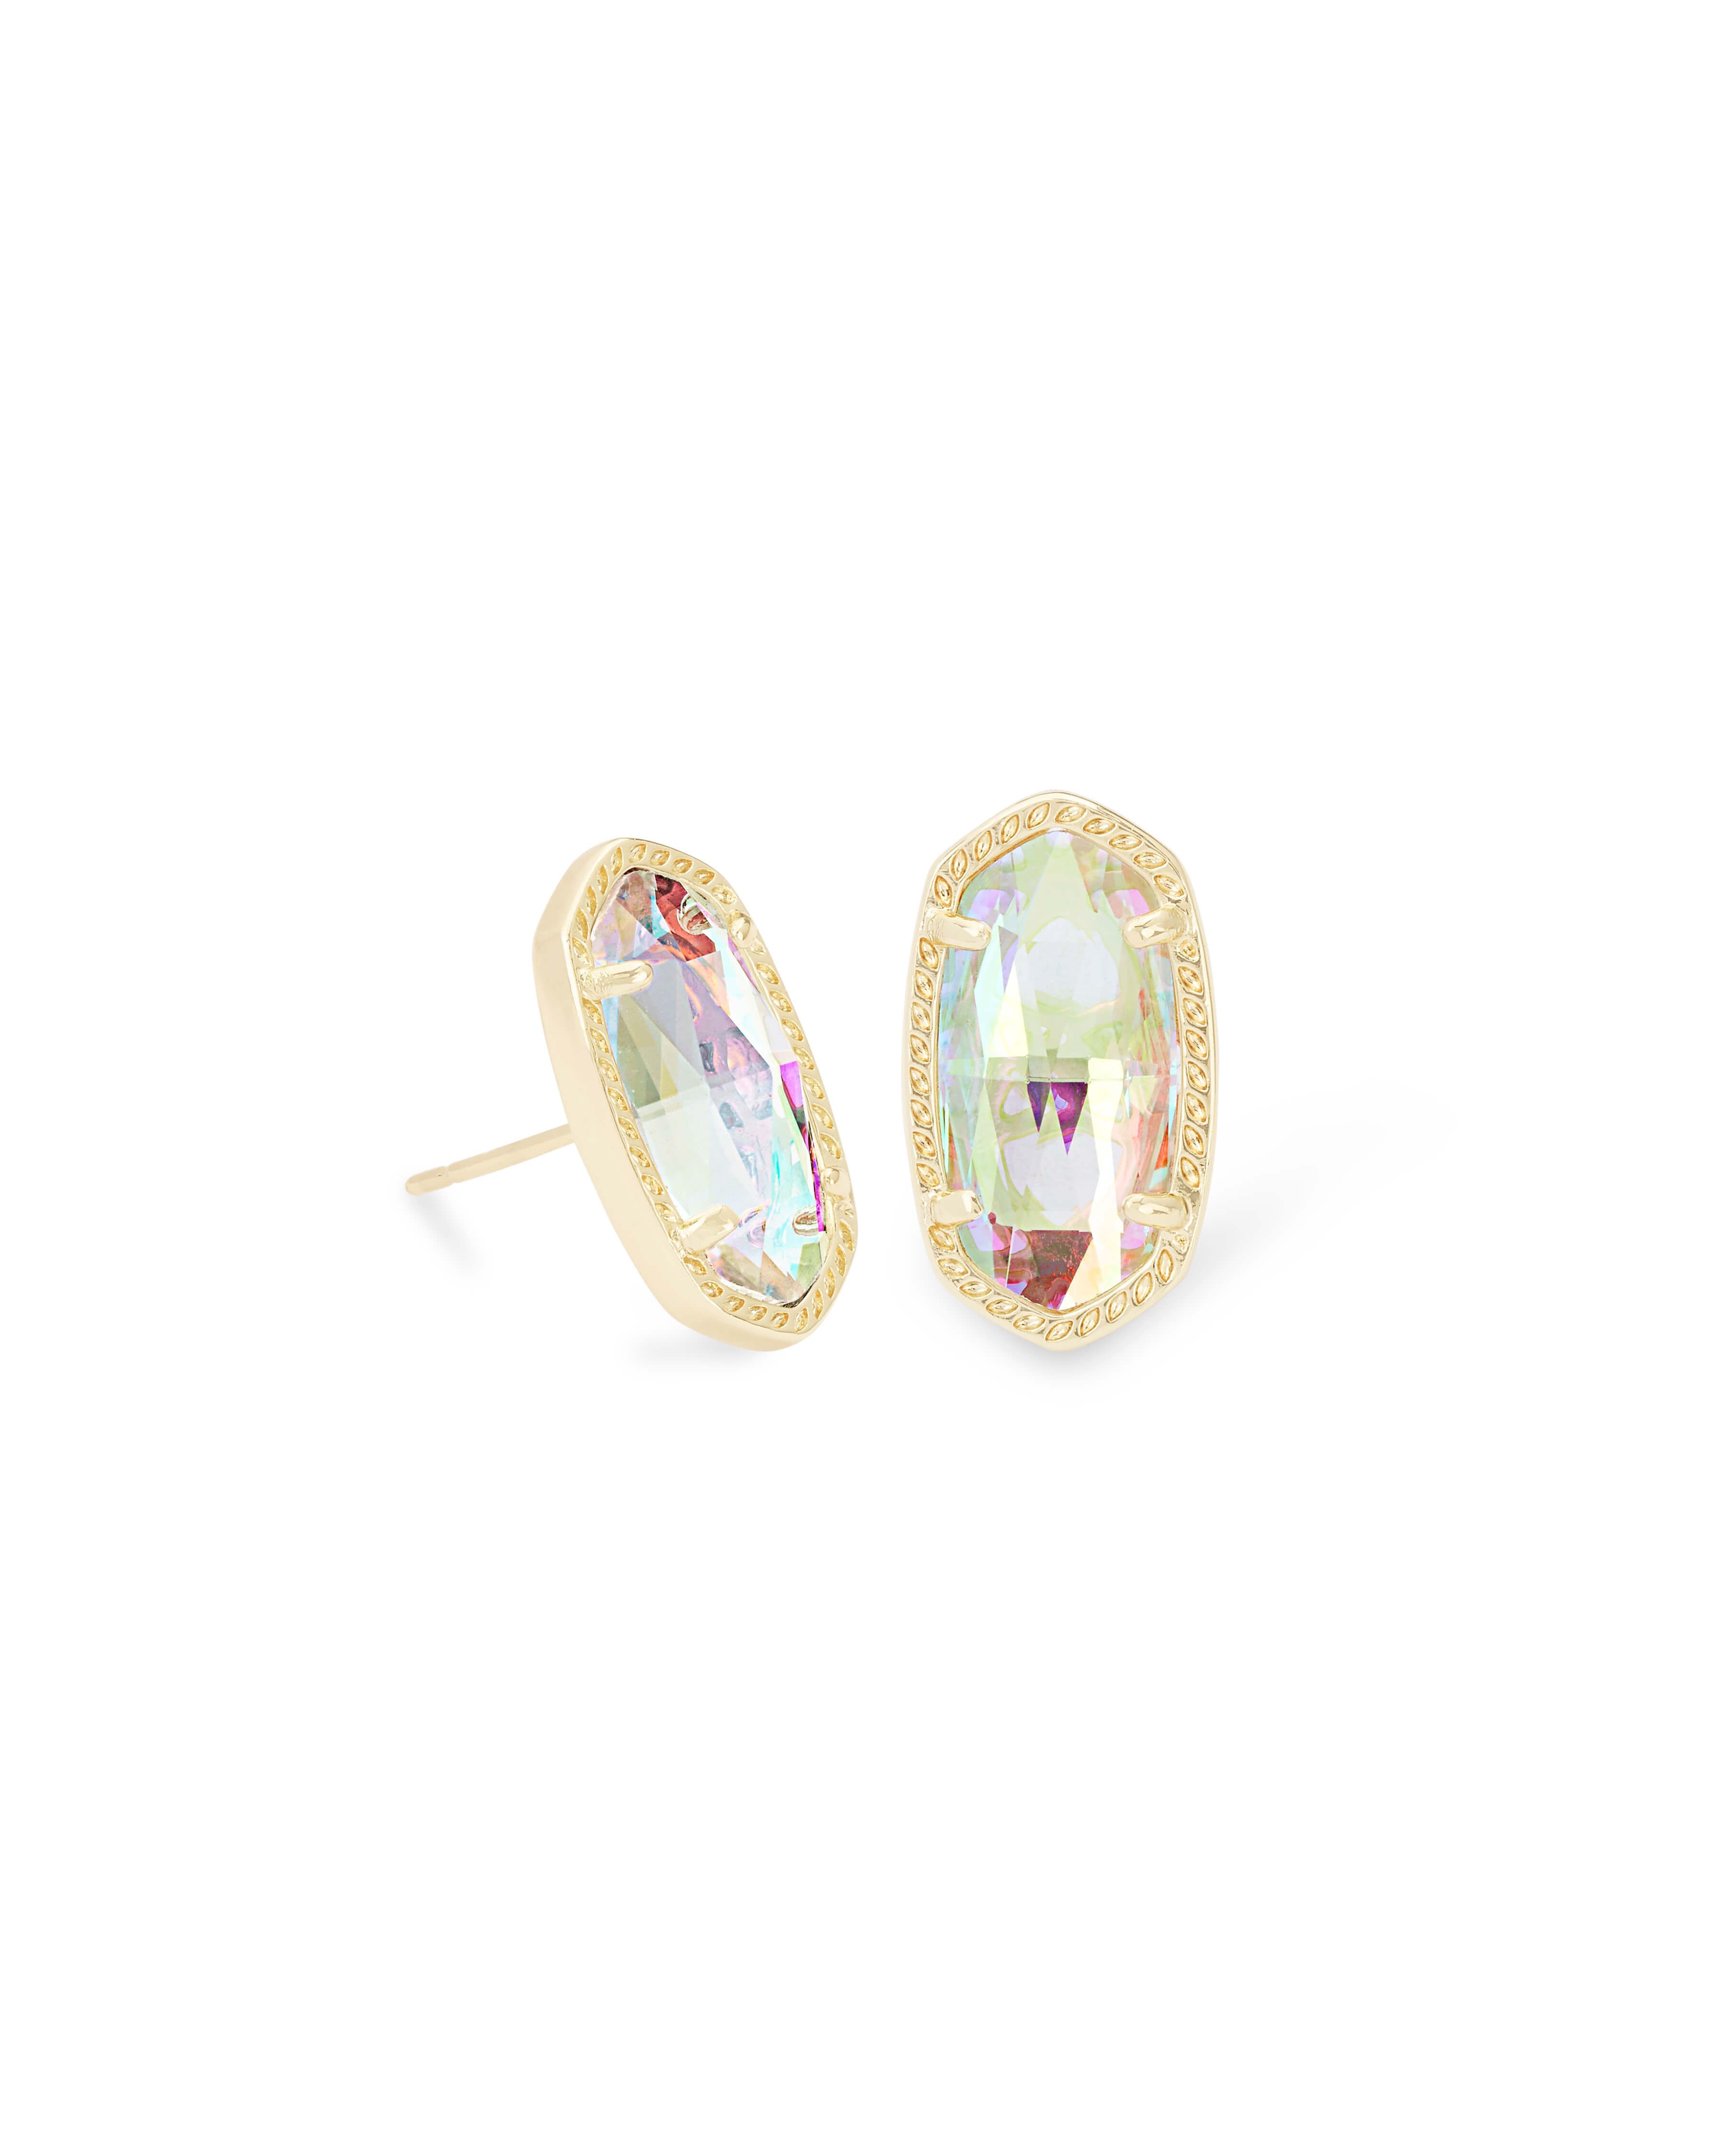 Ellie Gold Stud Earrings in Dichroic Glass | Kendra Scott